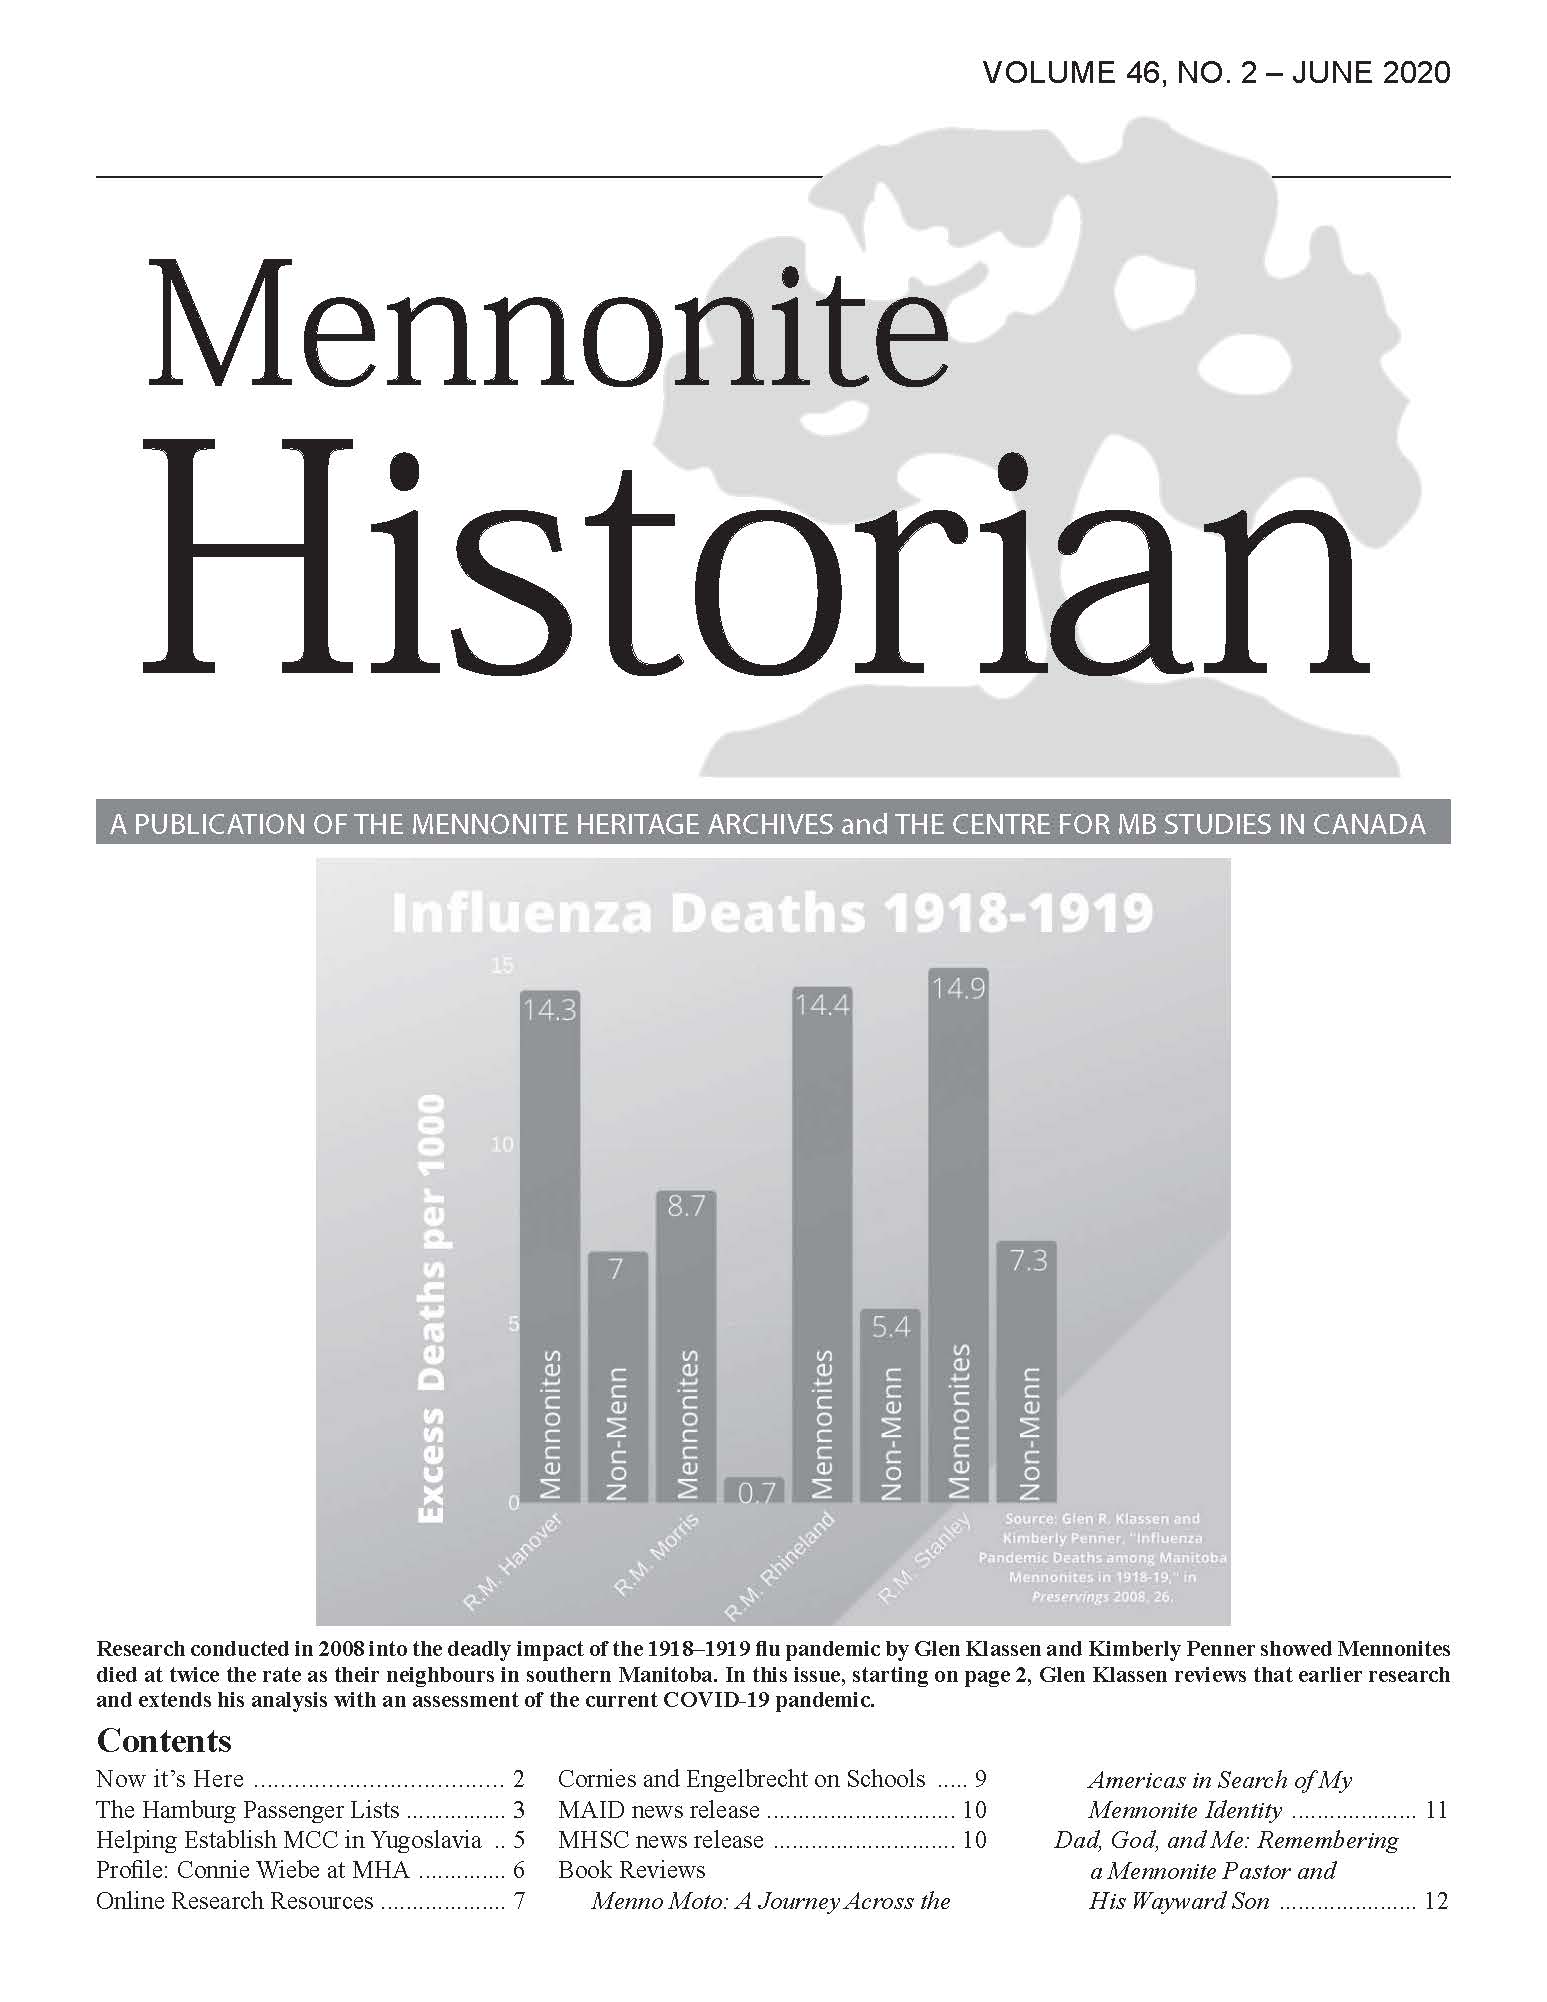 Mennonite Historian (June 2020)